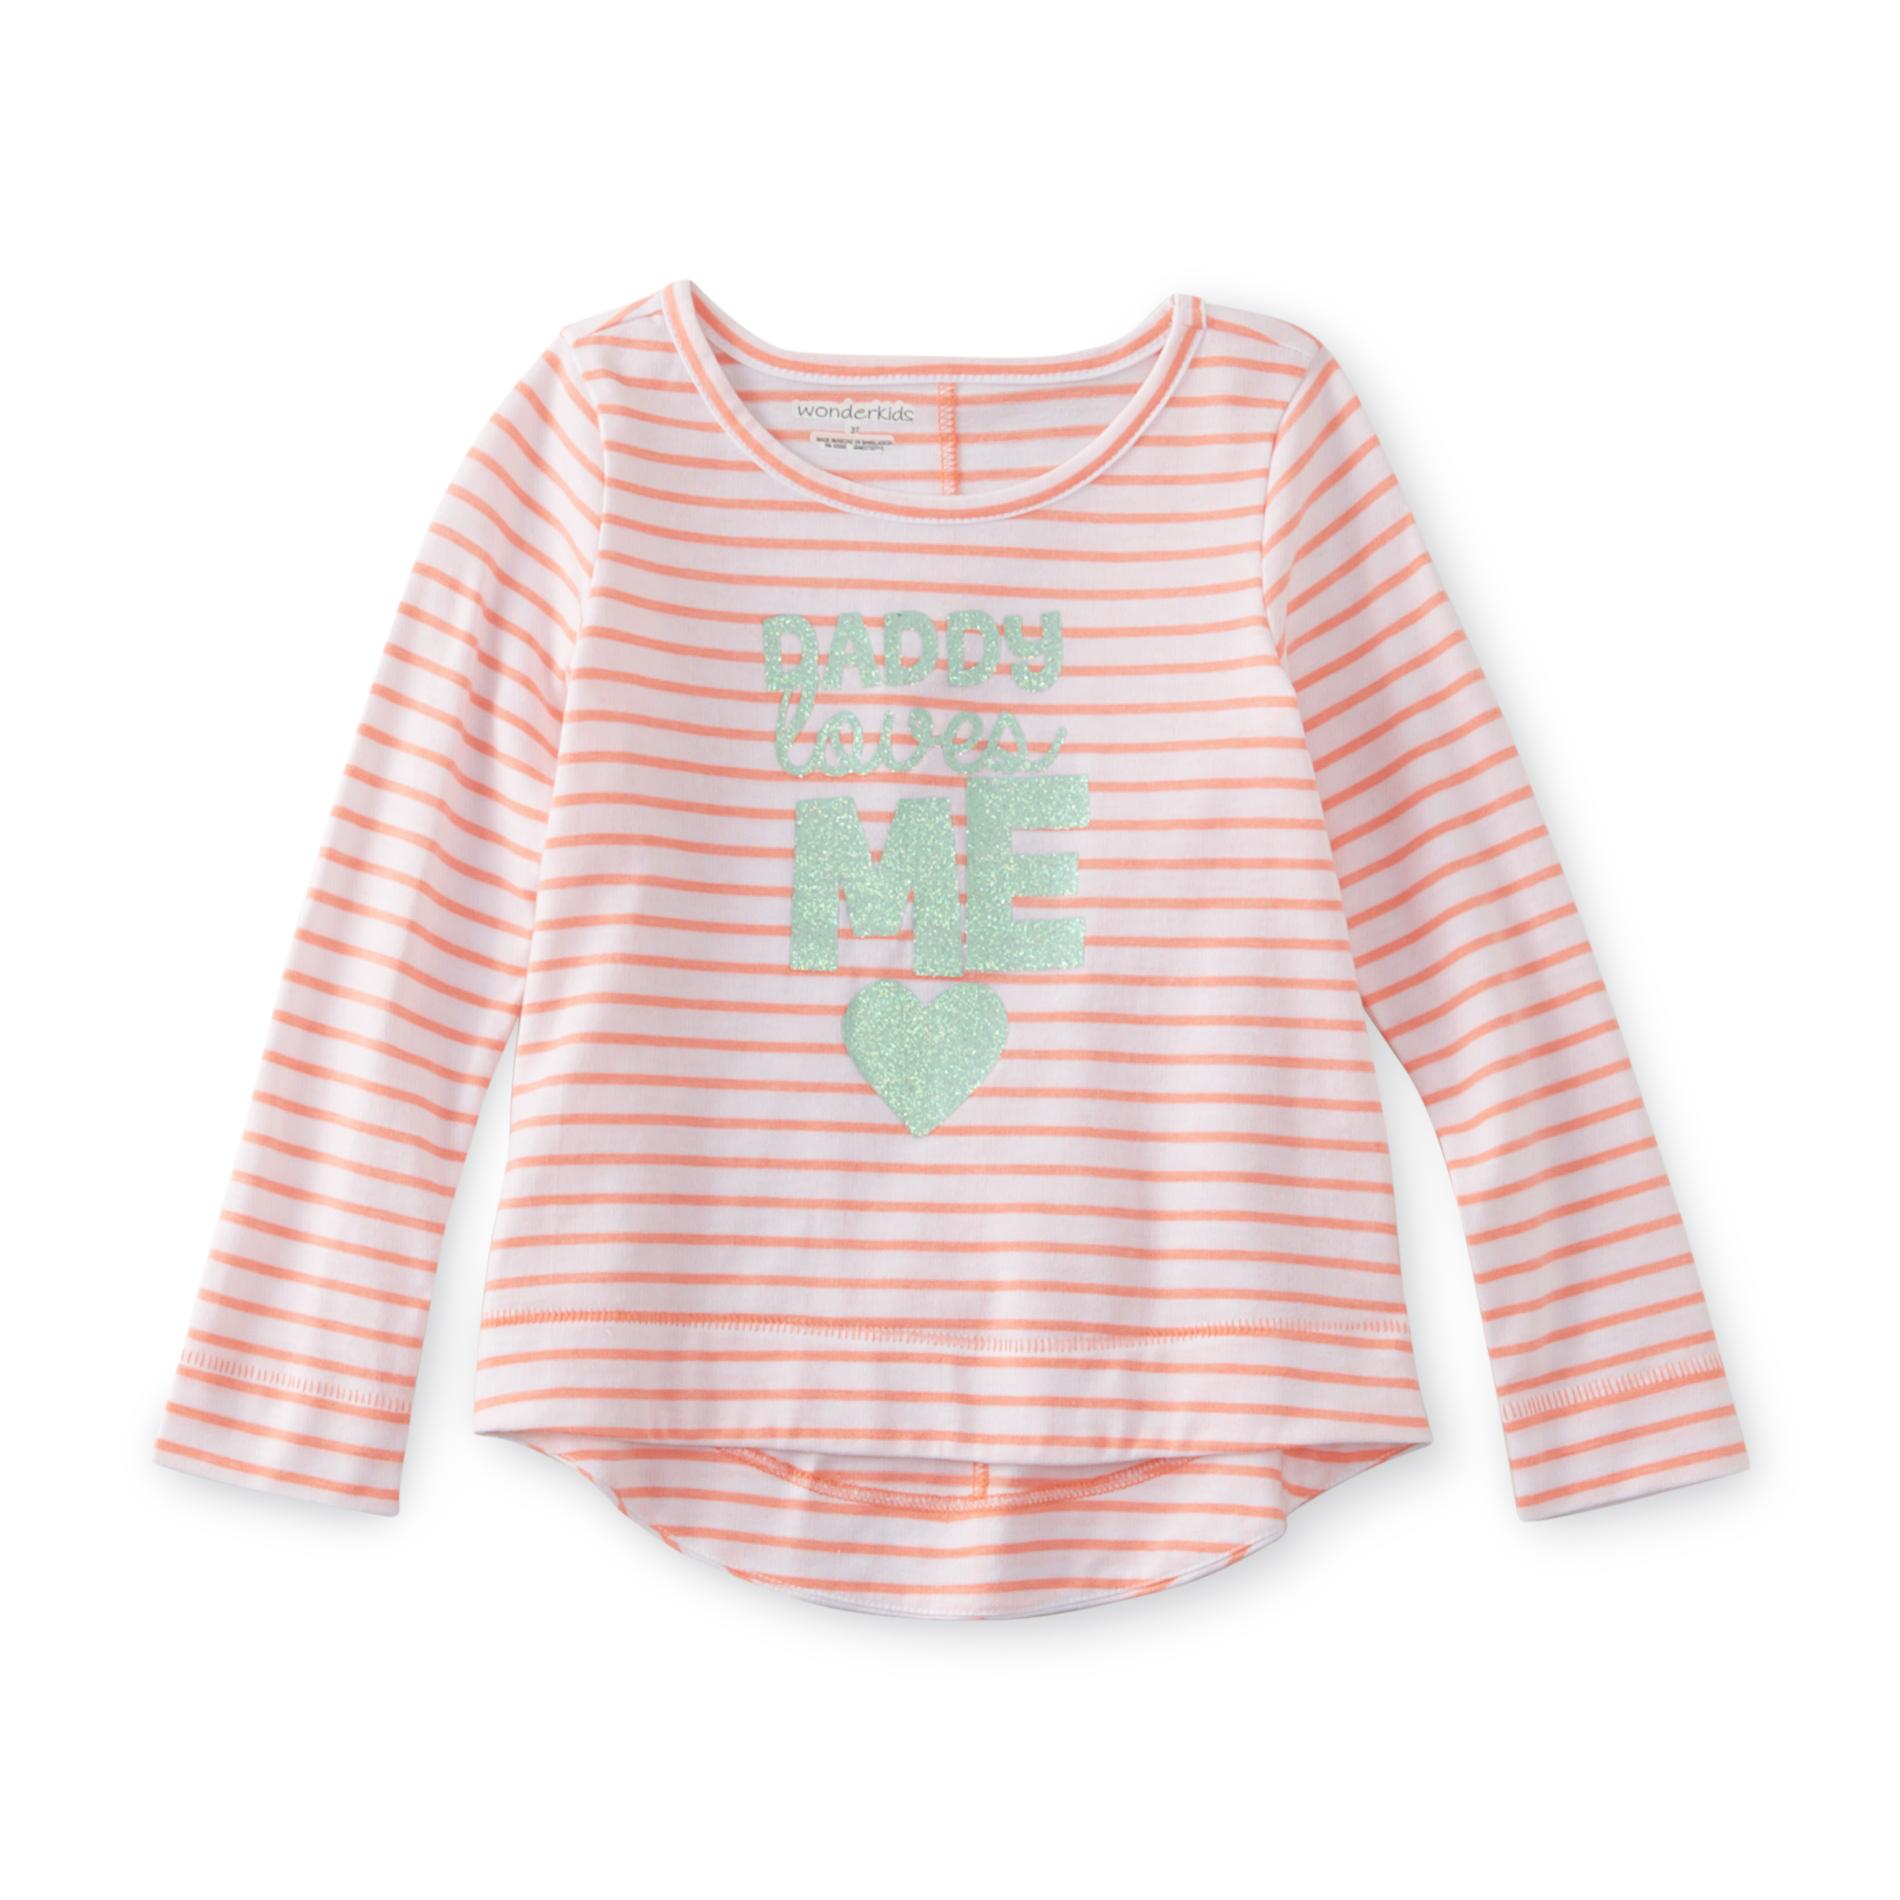 Infant & Toddler Girl's Glitter Graphic T-Shirt - Striped